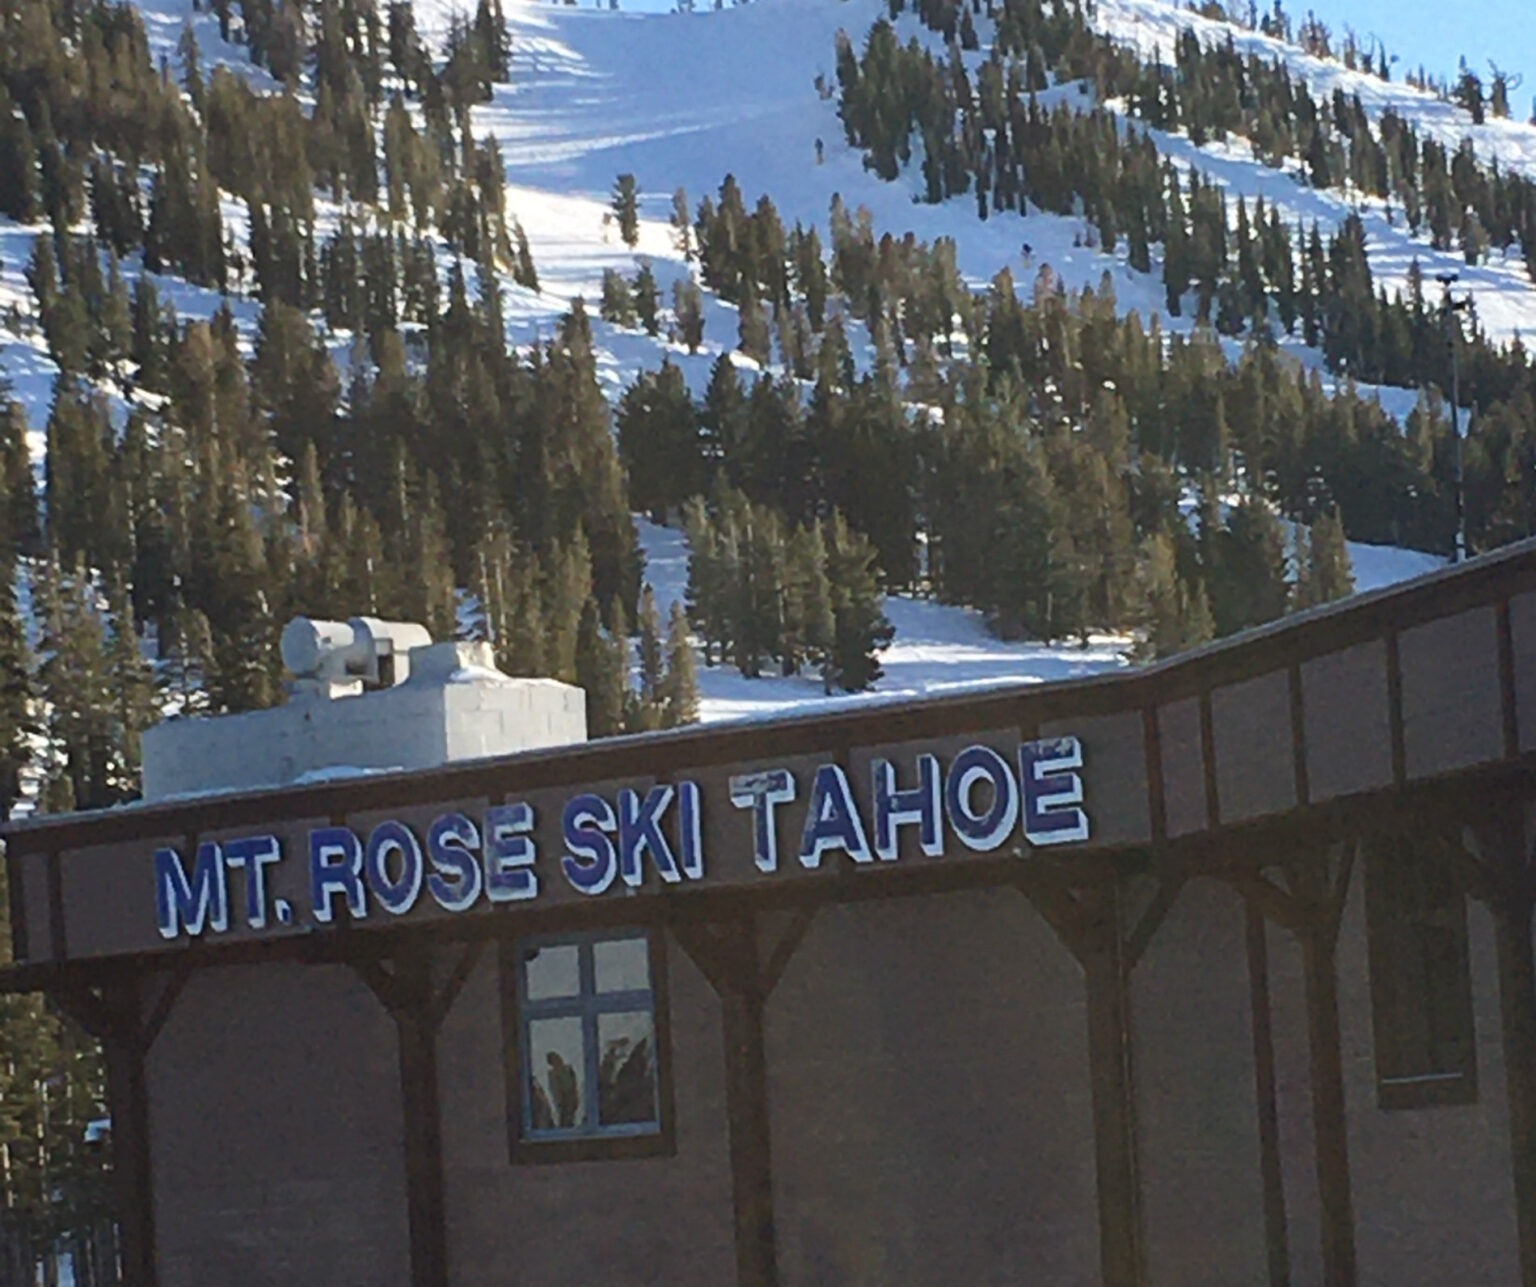 Mt. Rose offering lift ticket deals